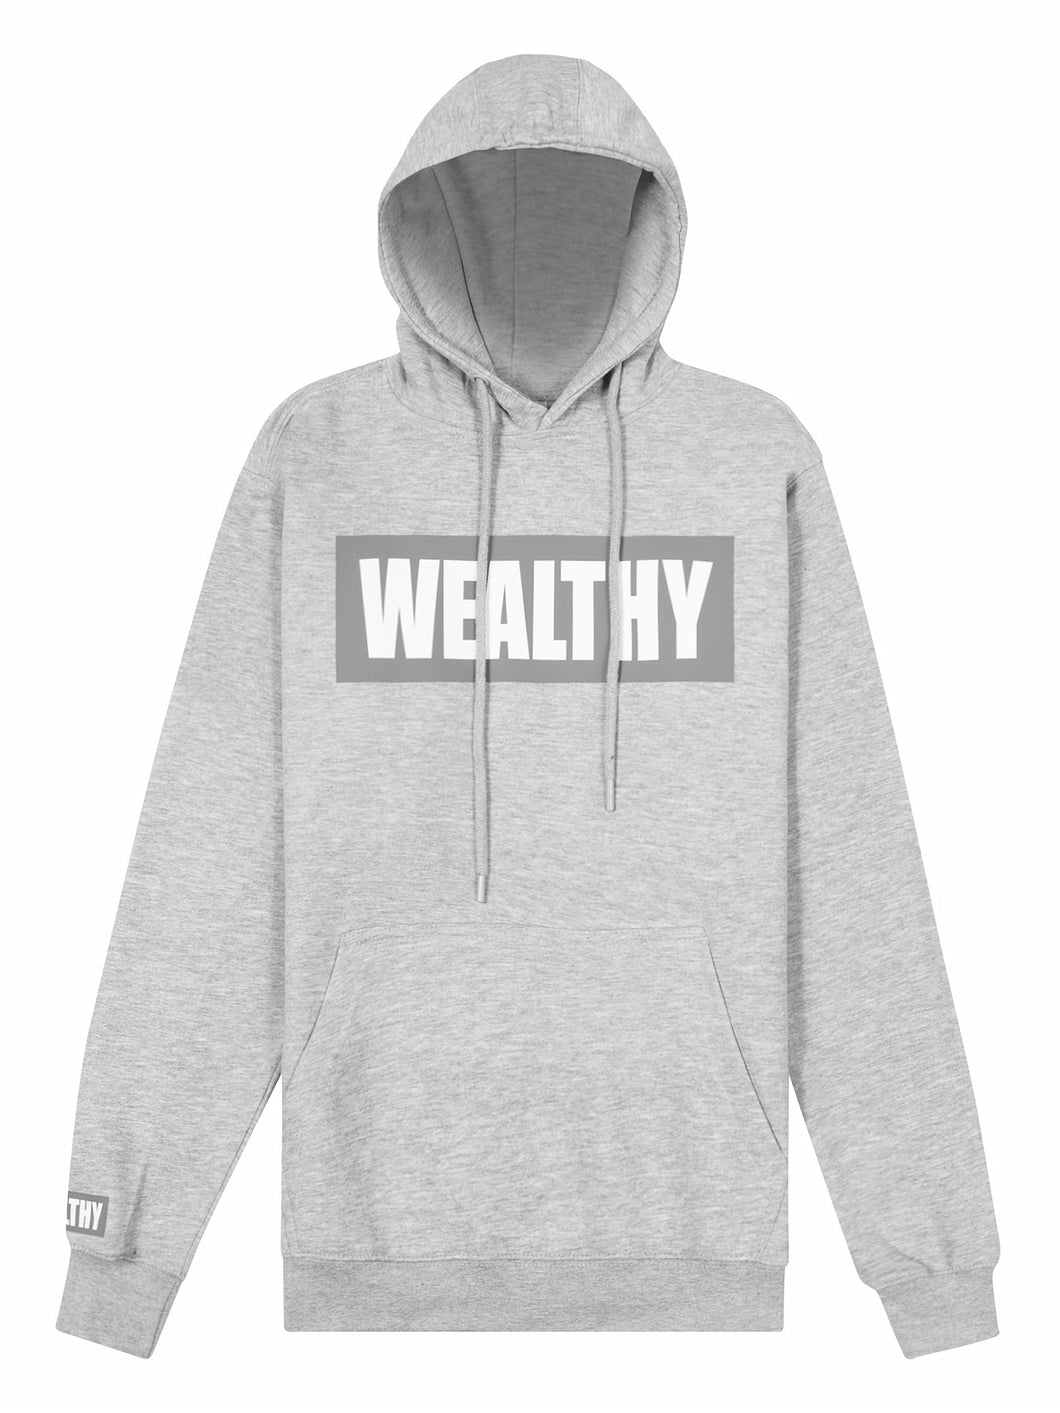 Wealthy Hoodie (Heather Grey/Storm Grey/White)